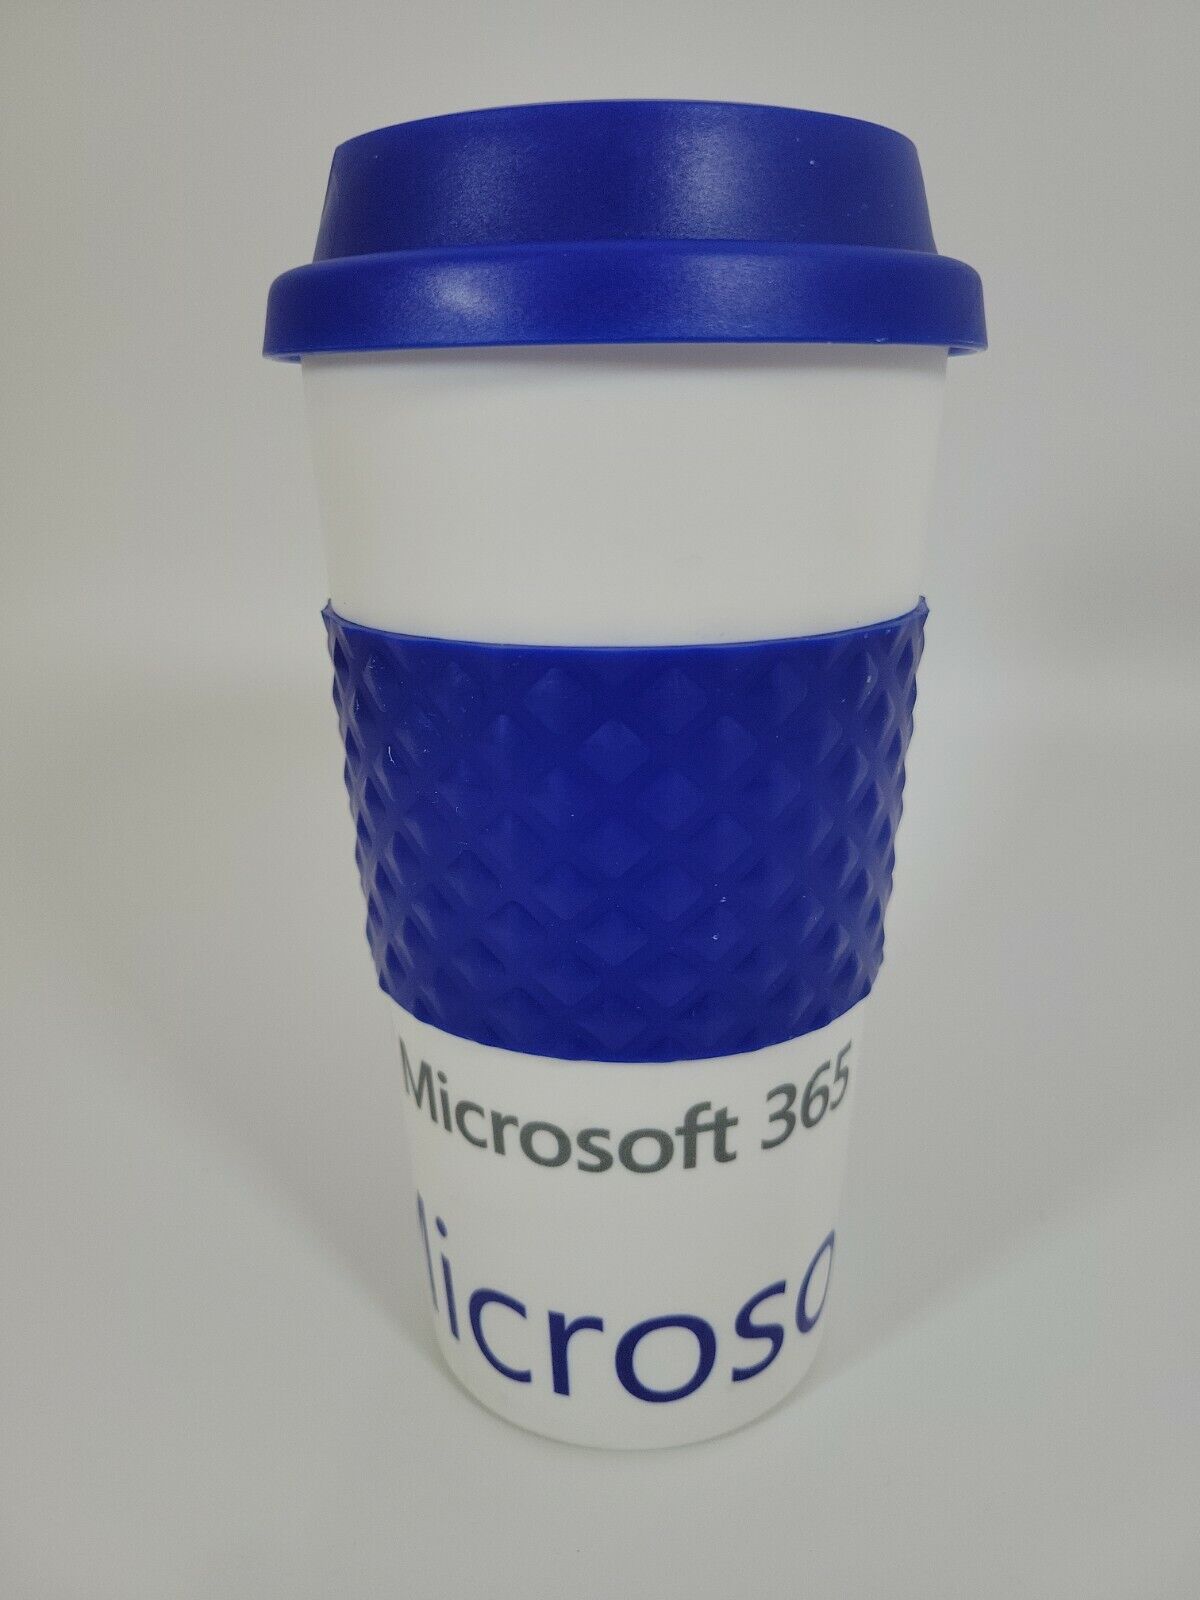 Microsoft Teams Travel Mug Plastic Windows 365 Media Partner Coffee Cup RARE